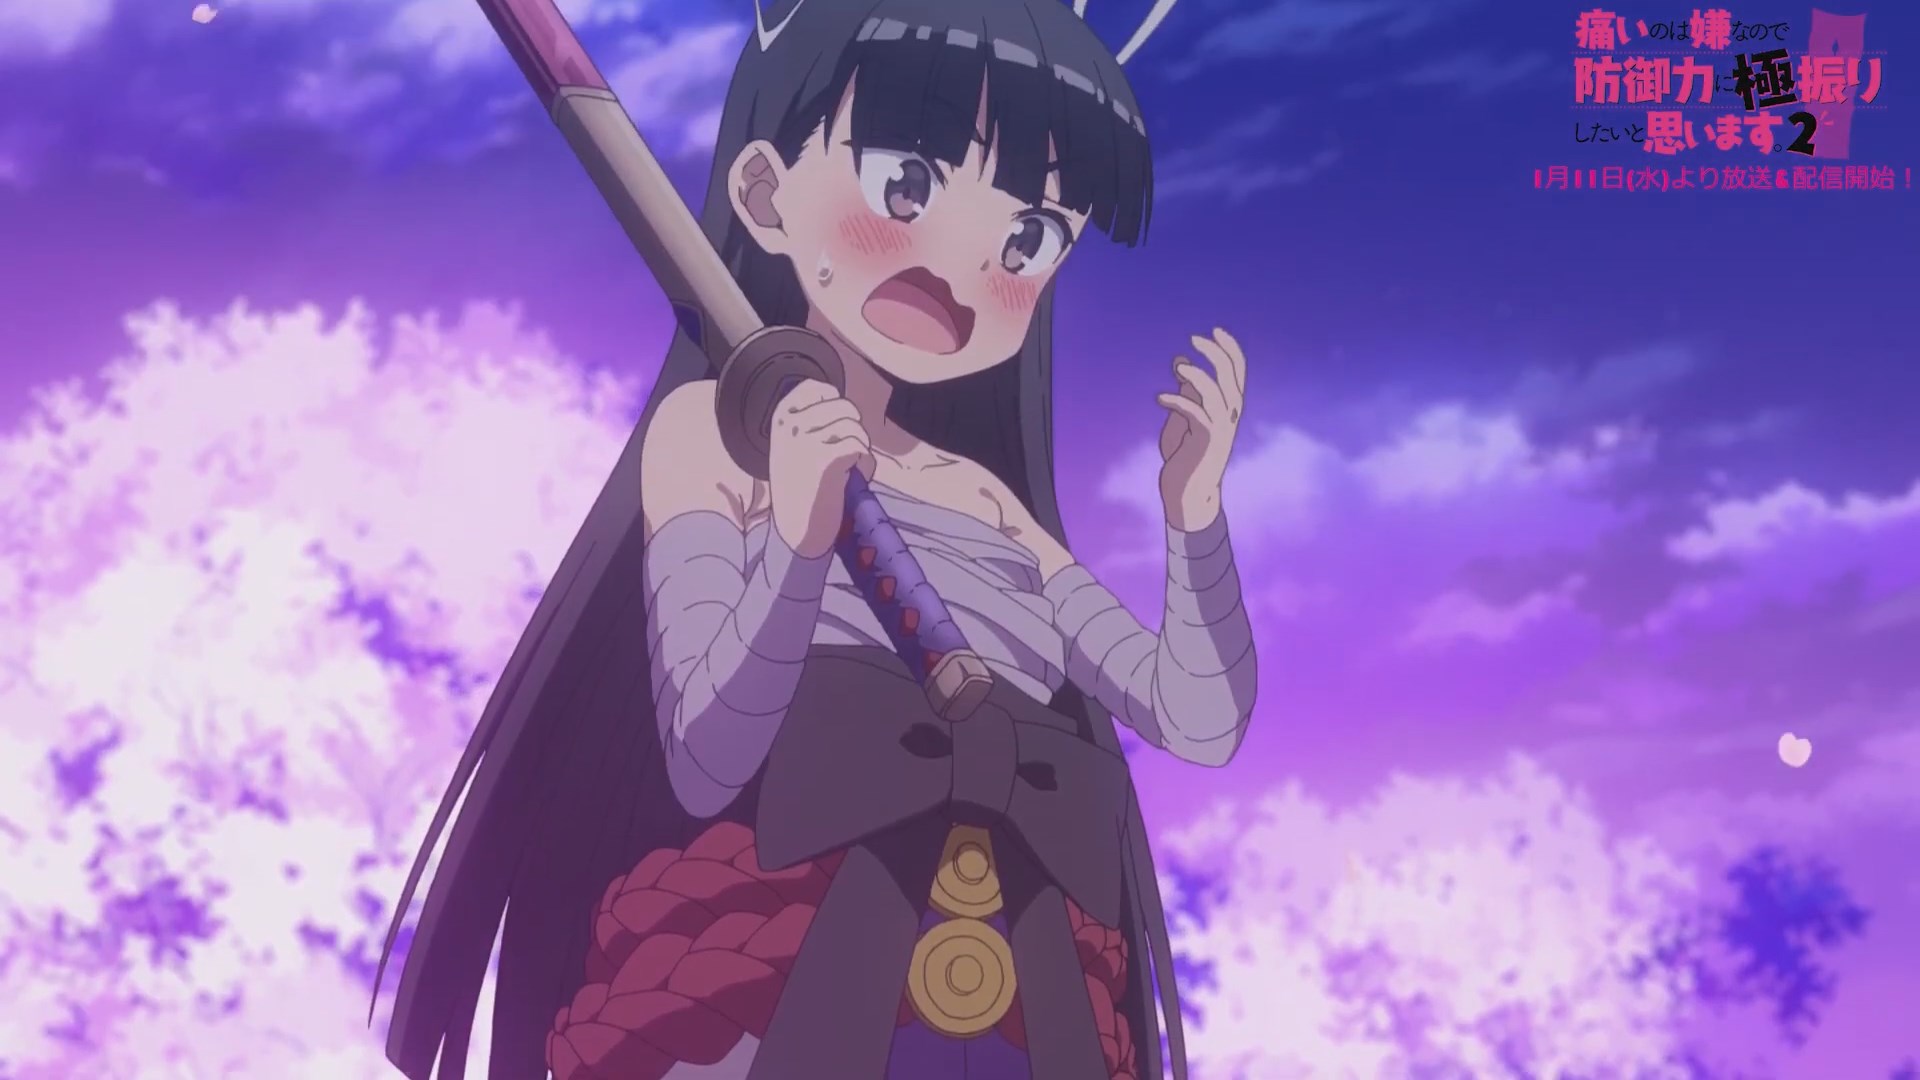 Bofuri: The Cute Gaming Adventure Comedy Anime Gets Second Season – OTAQUEST